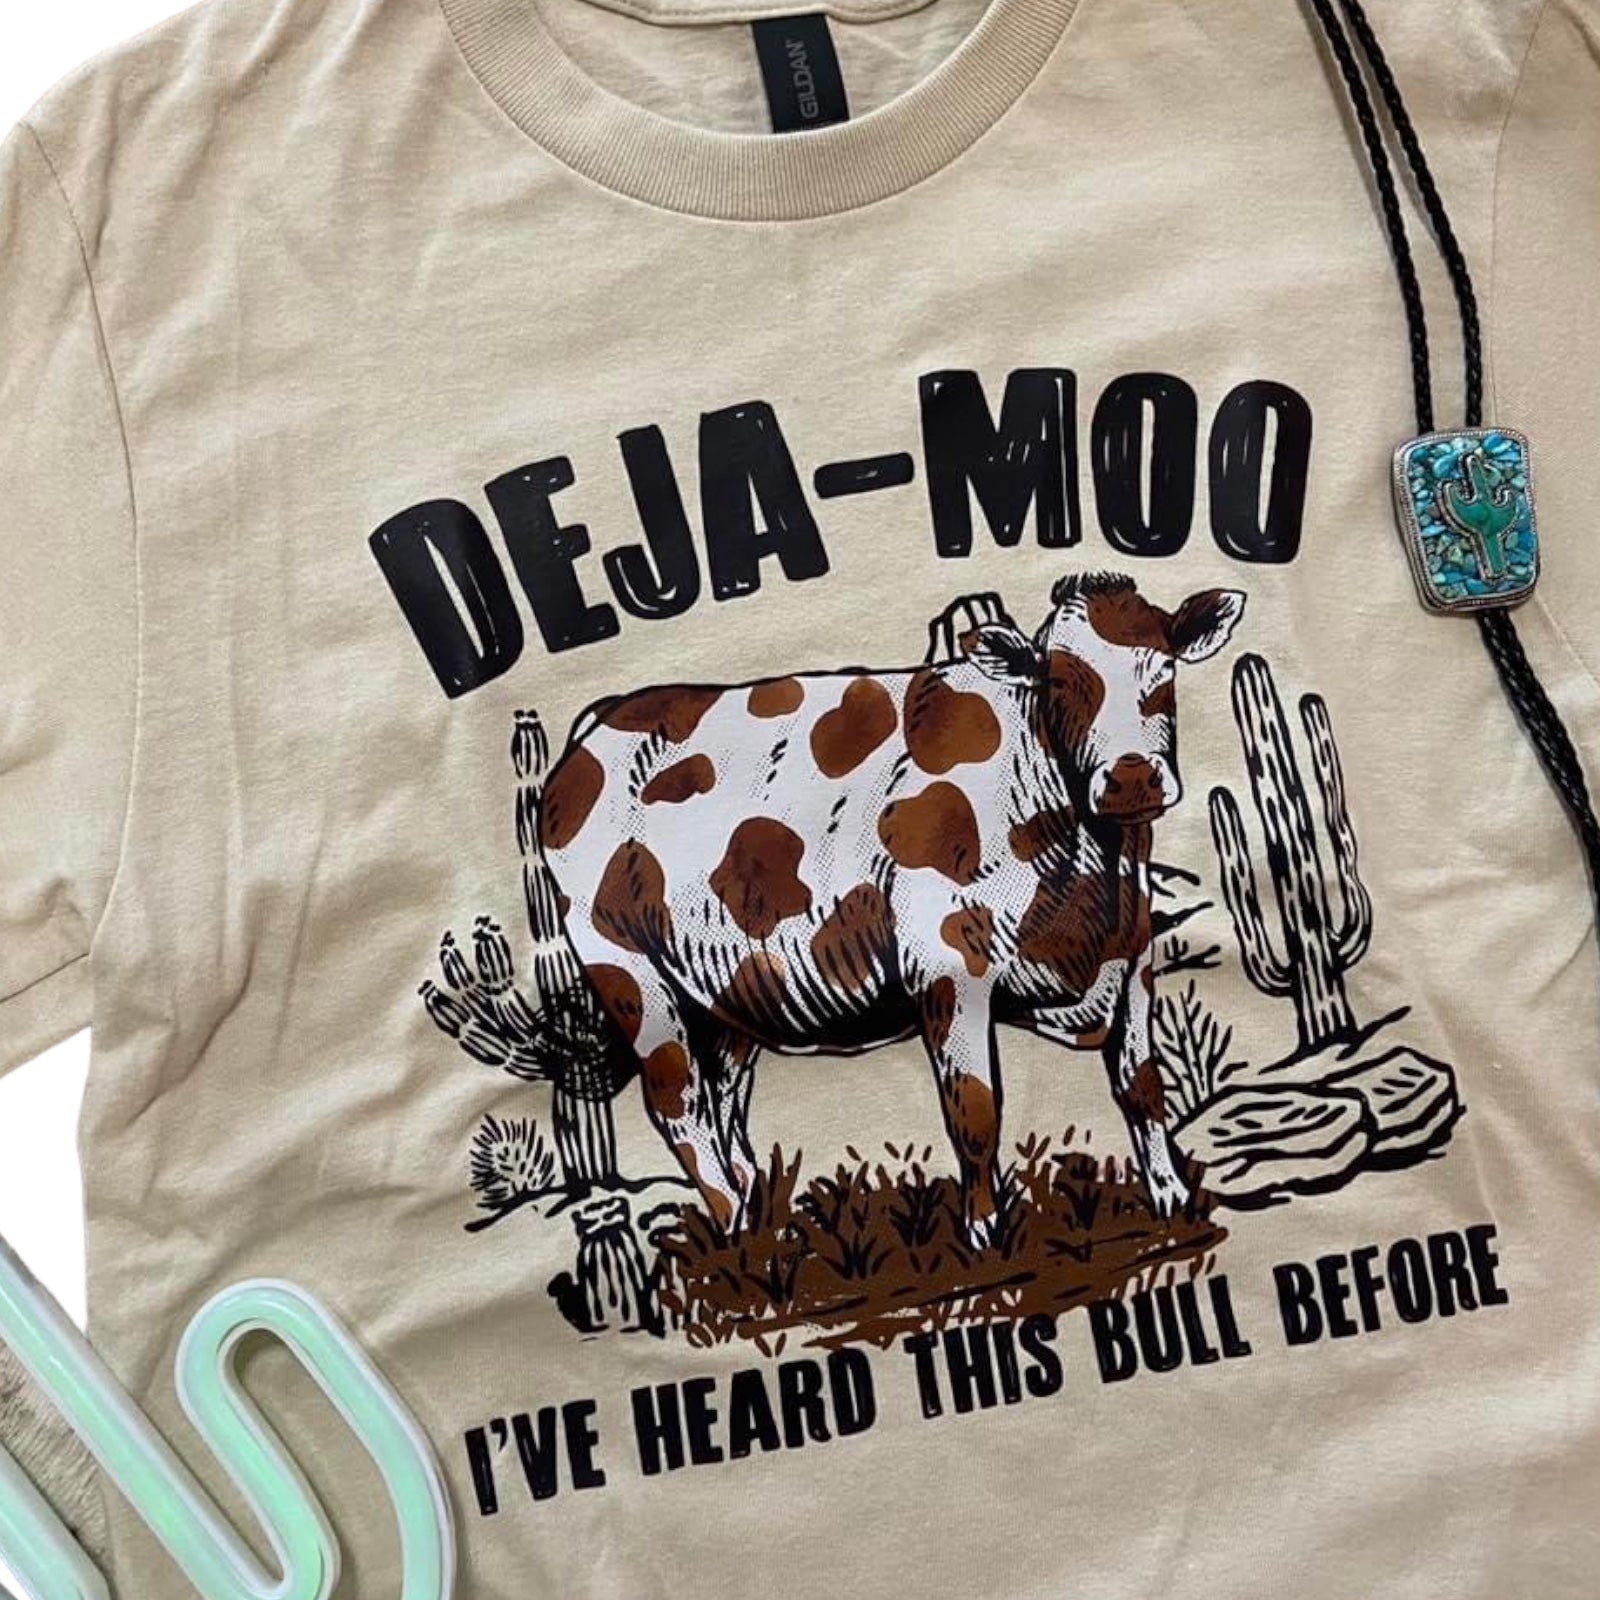 Deja-Moo Tee (Standard or Distressed)